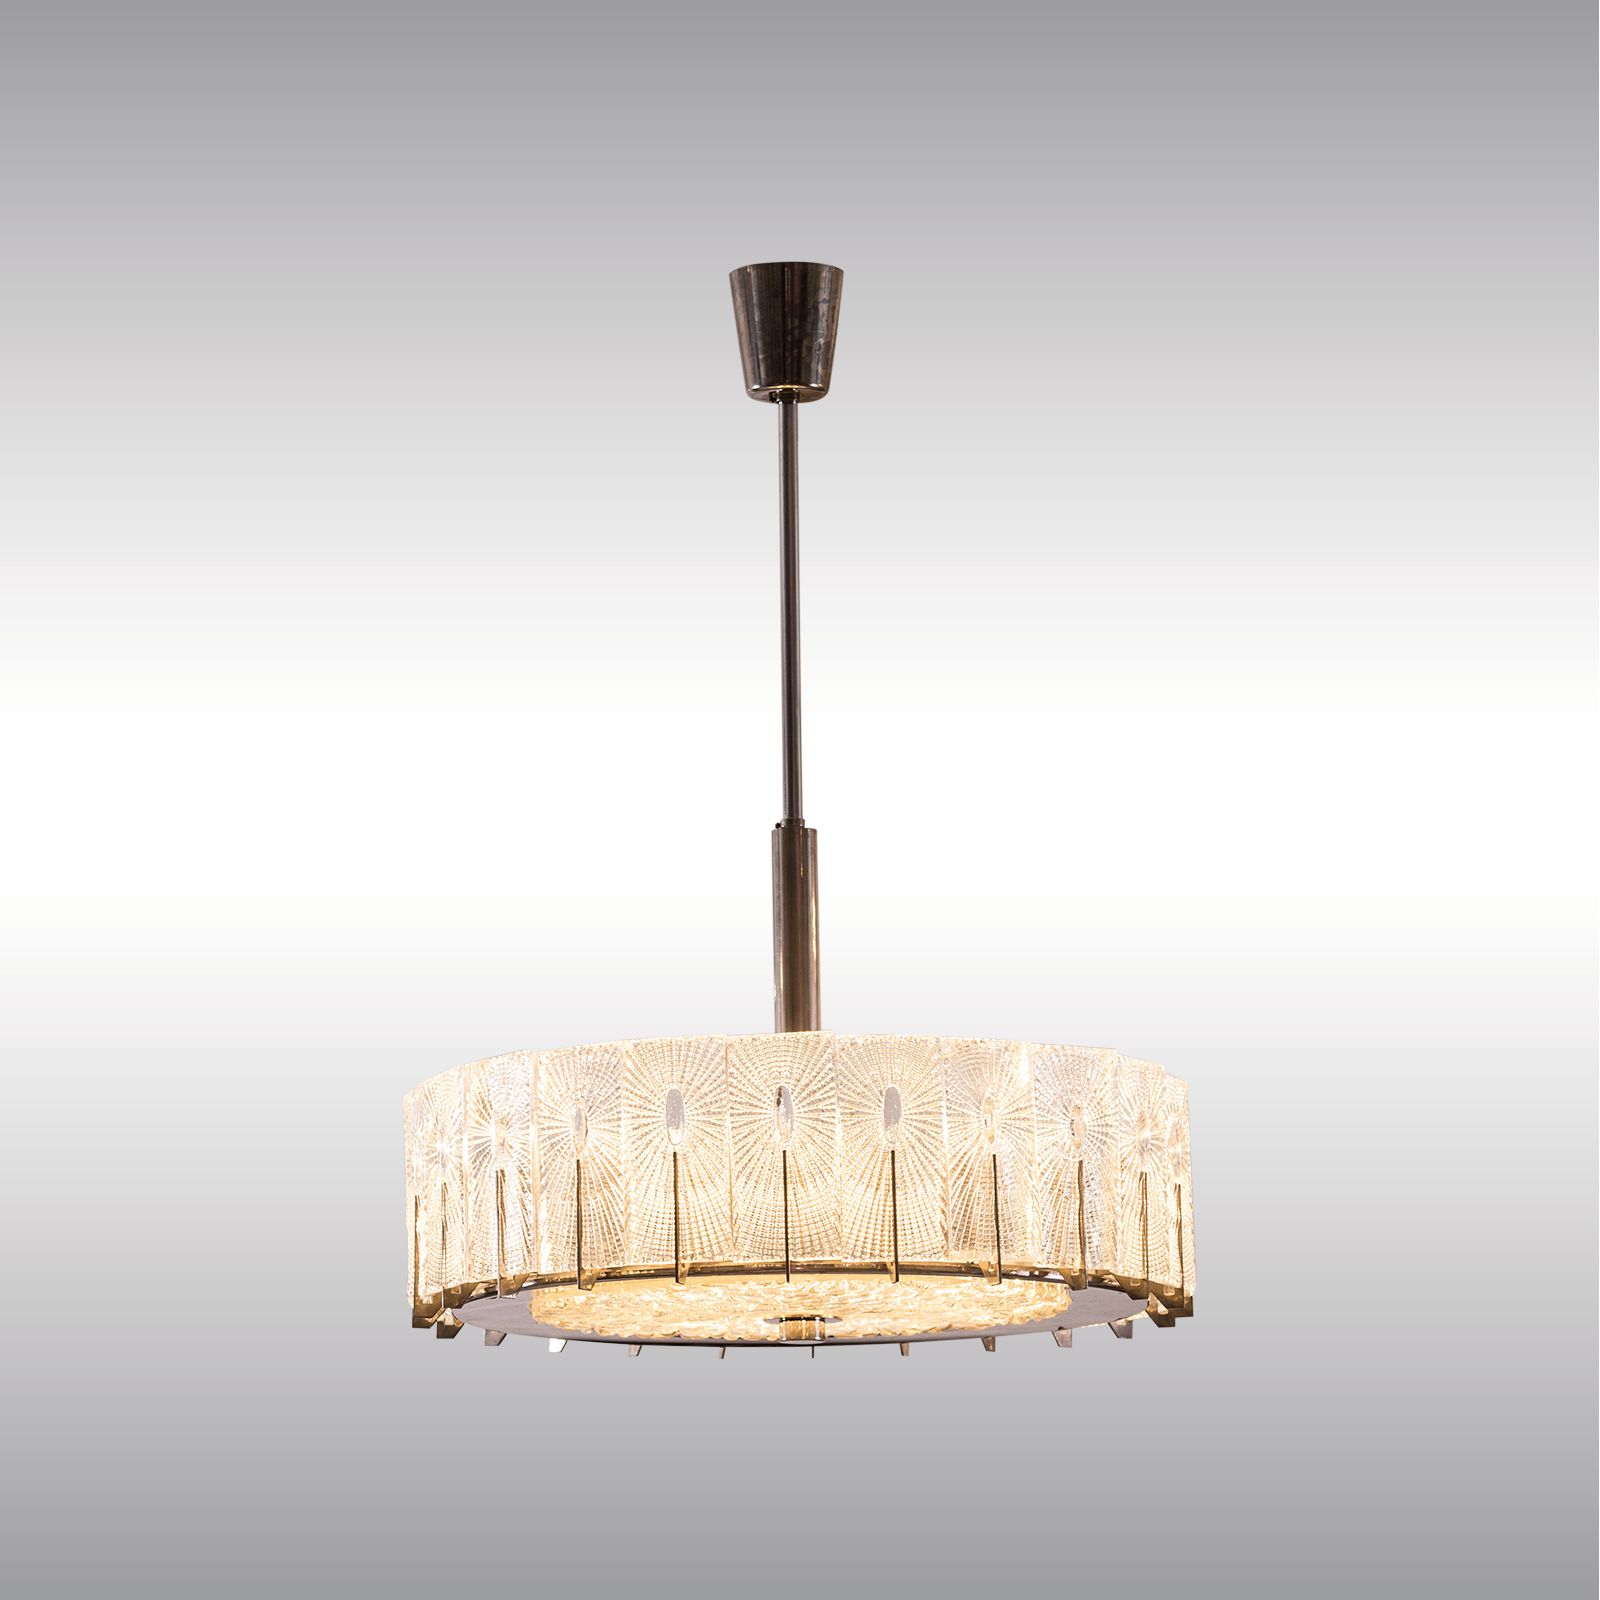 WOKA LAMPS VIENNA - OrderNr.: 50018|J.T. Kalmar Chandelier - Design: Doria